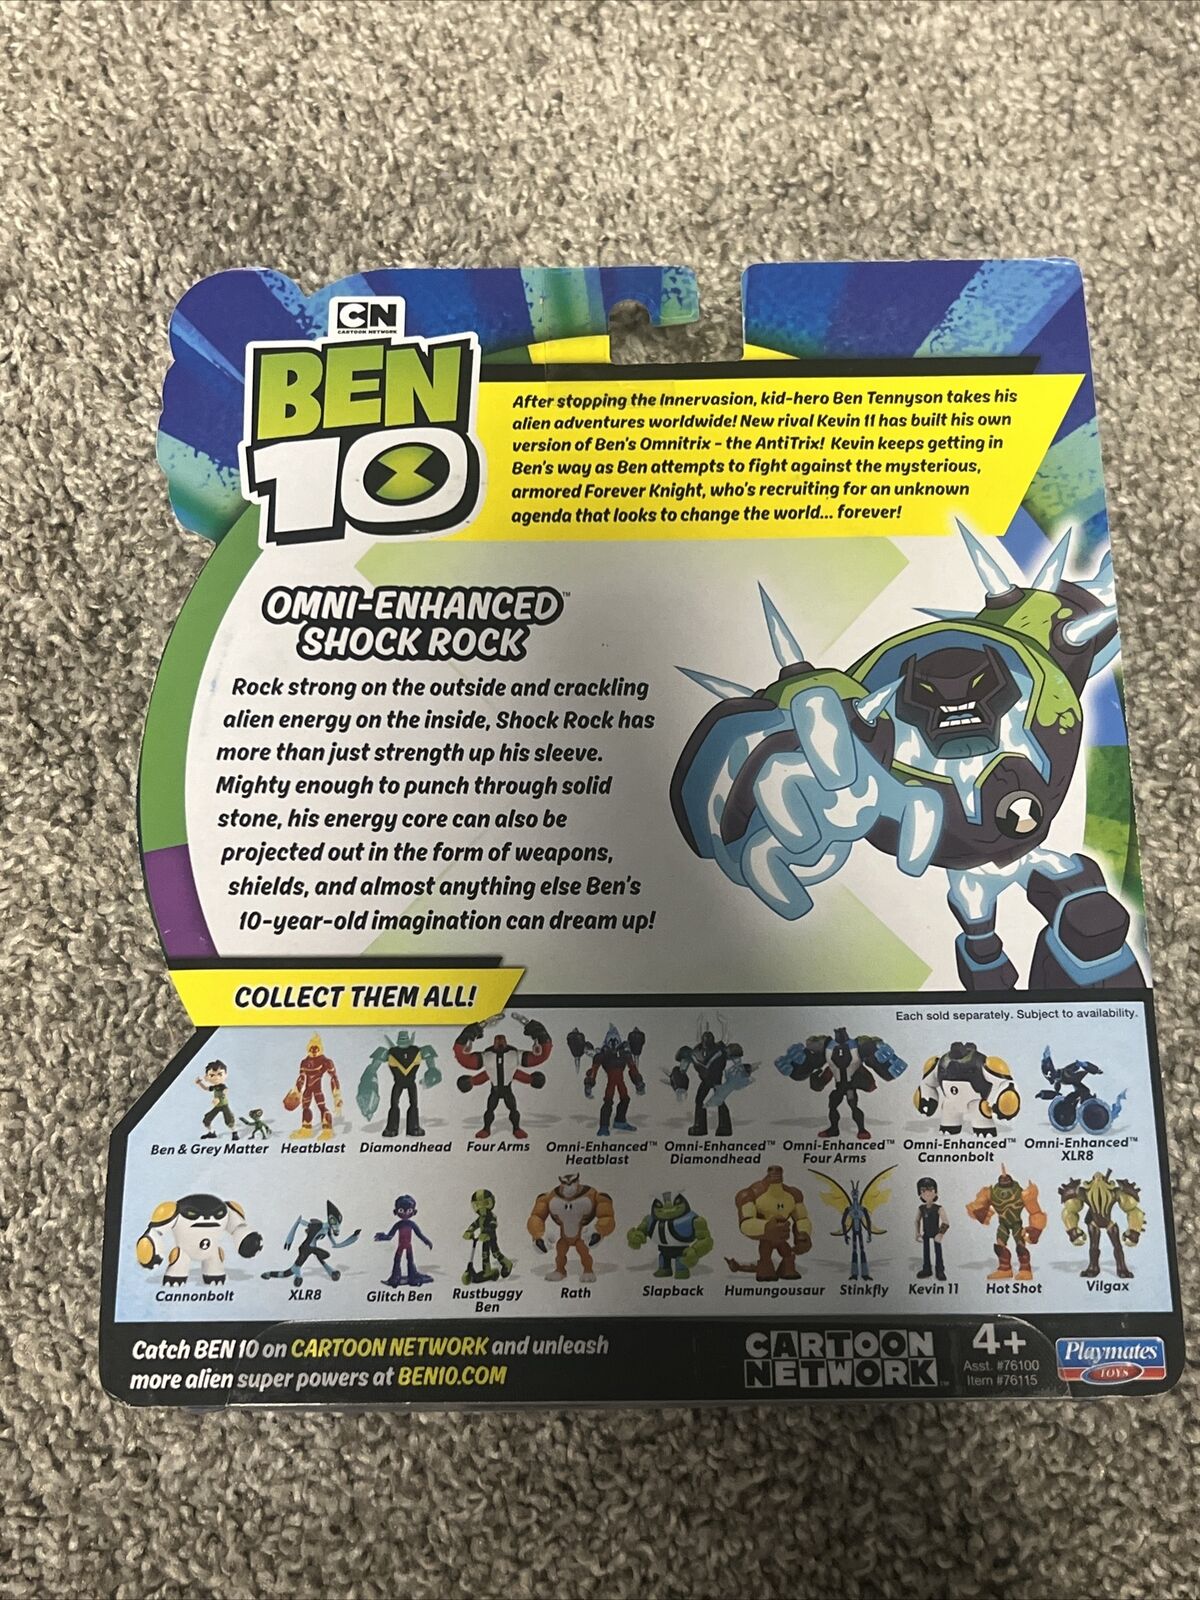 Ben 10 Omni-Enhanced Shock Rock Action Figure NEW Sealed 2018/19 Cartoon Network Playmates Toys - фотография #2